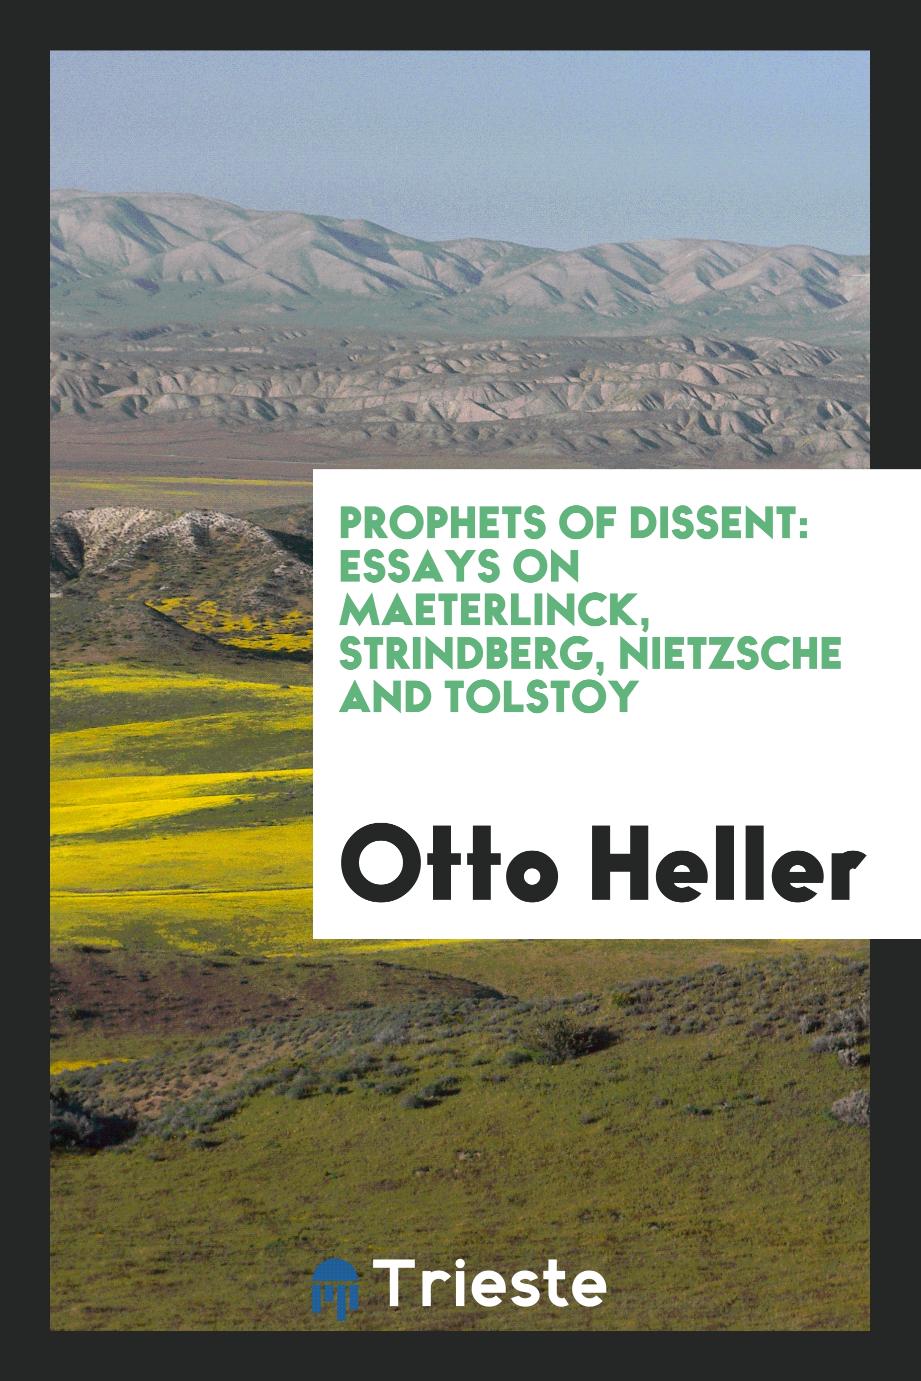 Prophets of dissent: essays on Maeterlinck, Strindberg, Nietzsche and Tolstoy